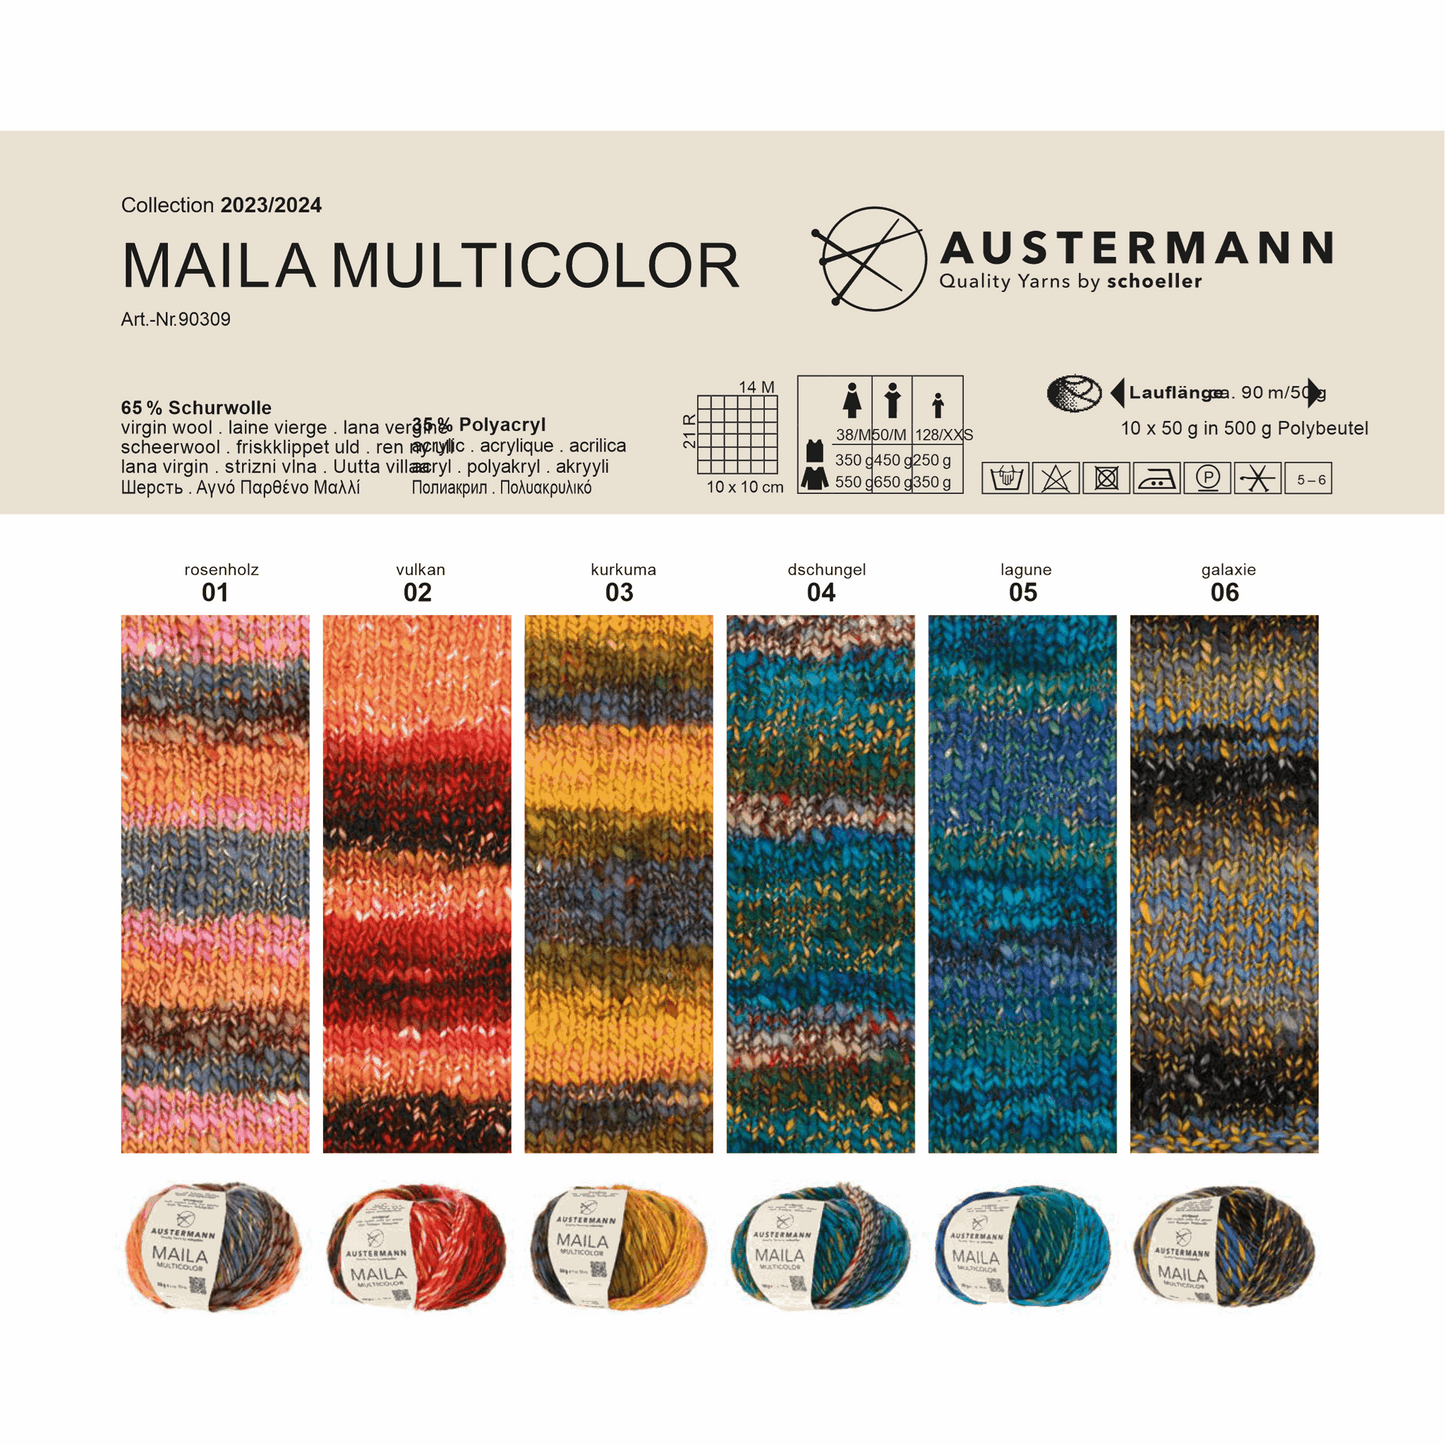 Austermann Maila Multicolor 50g, 90309, color galaxy 6